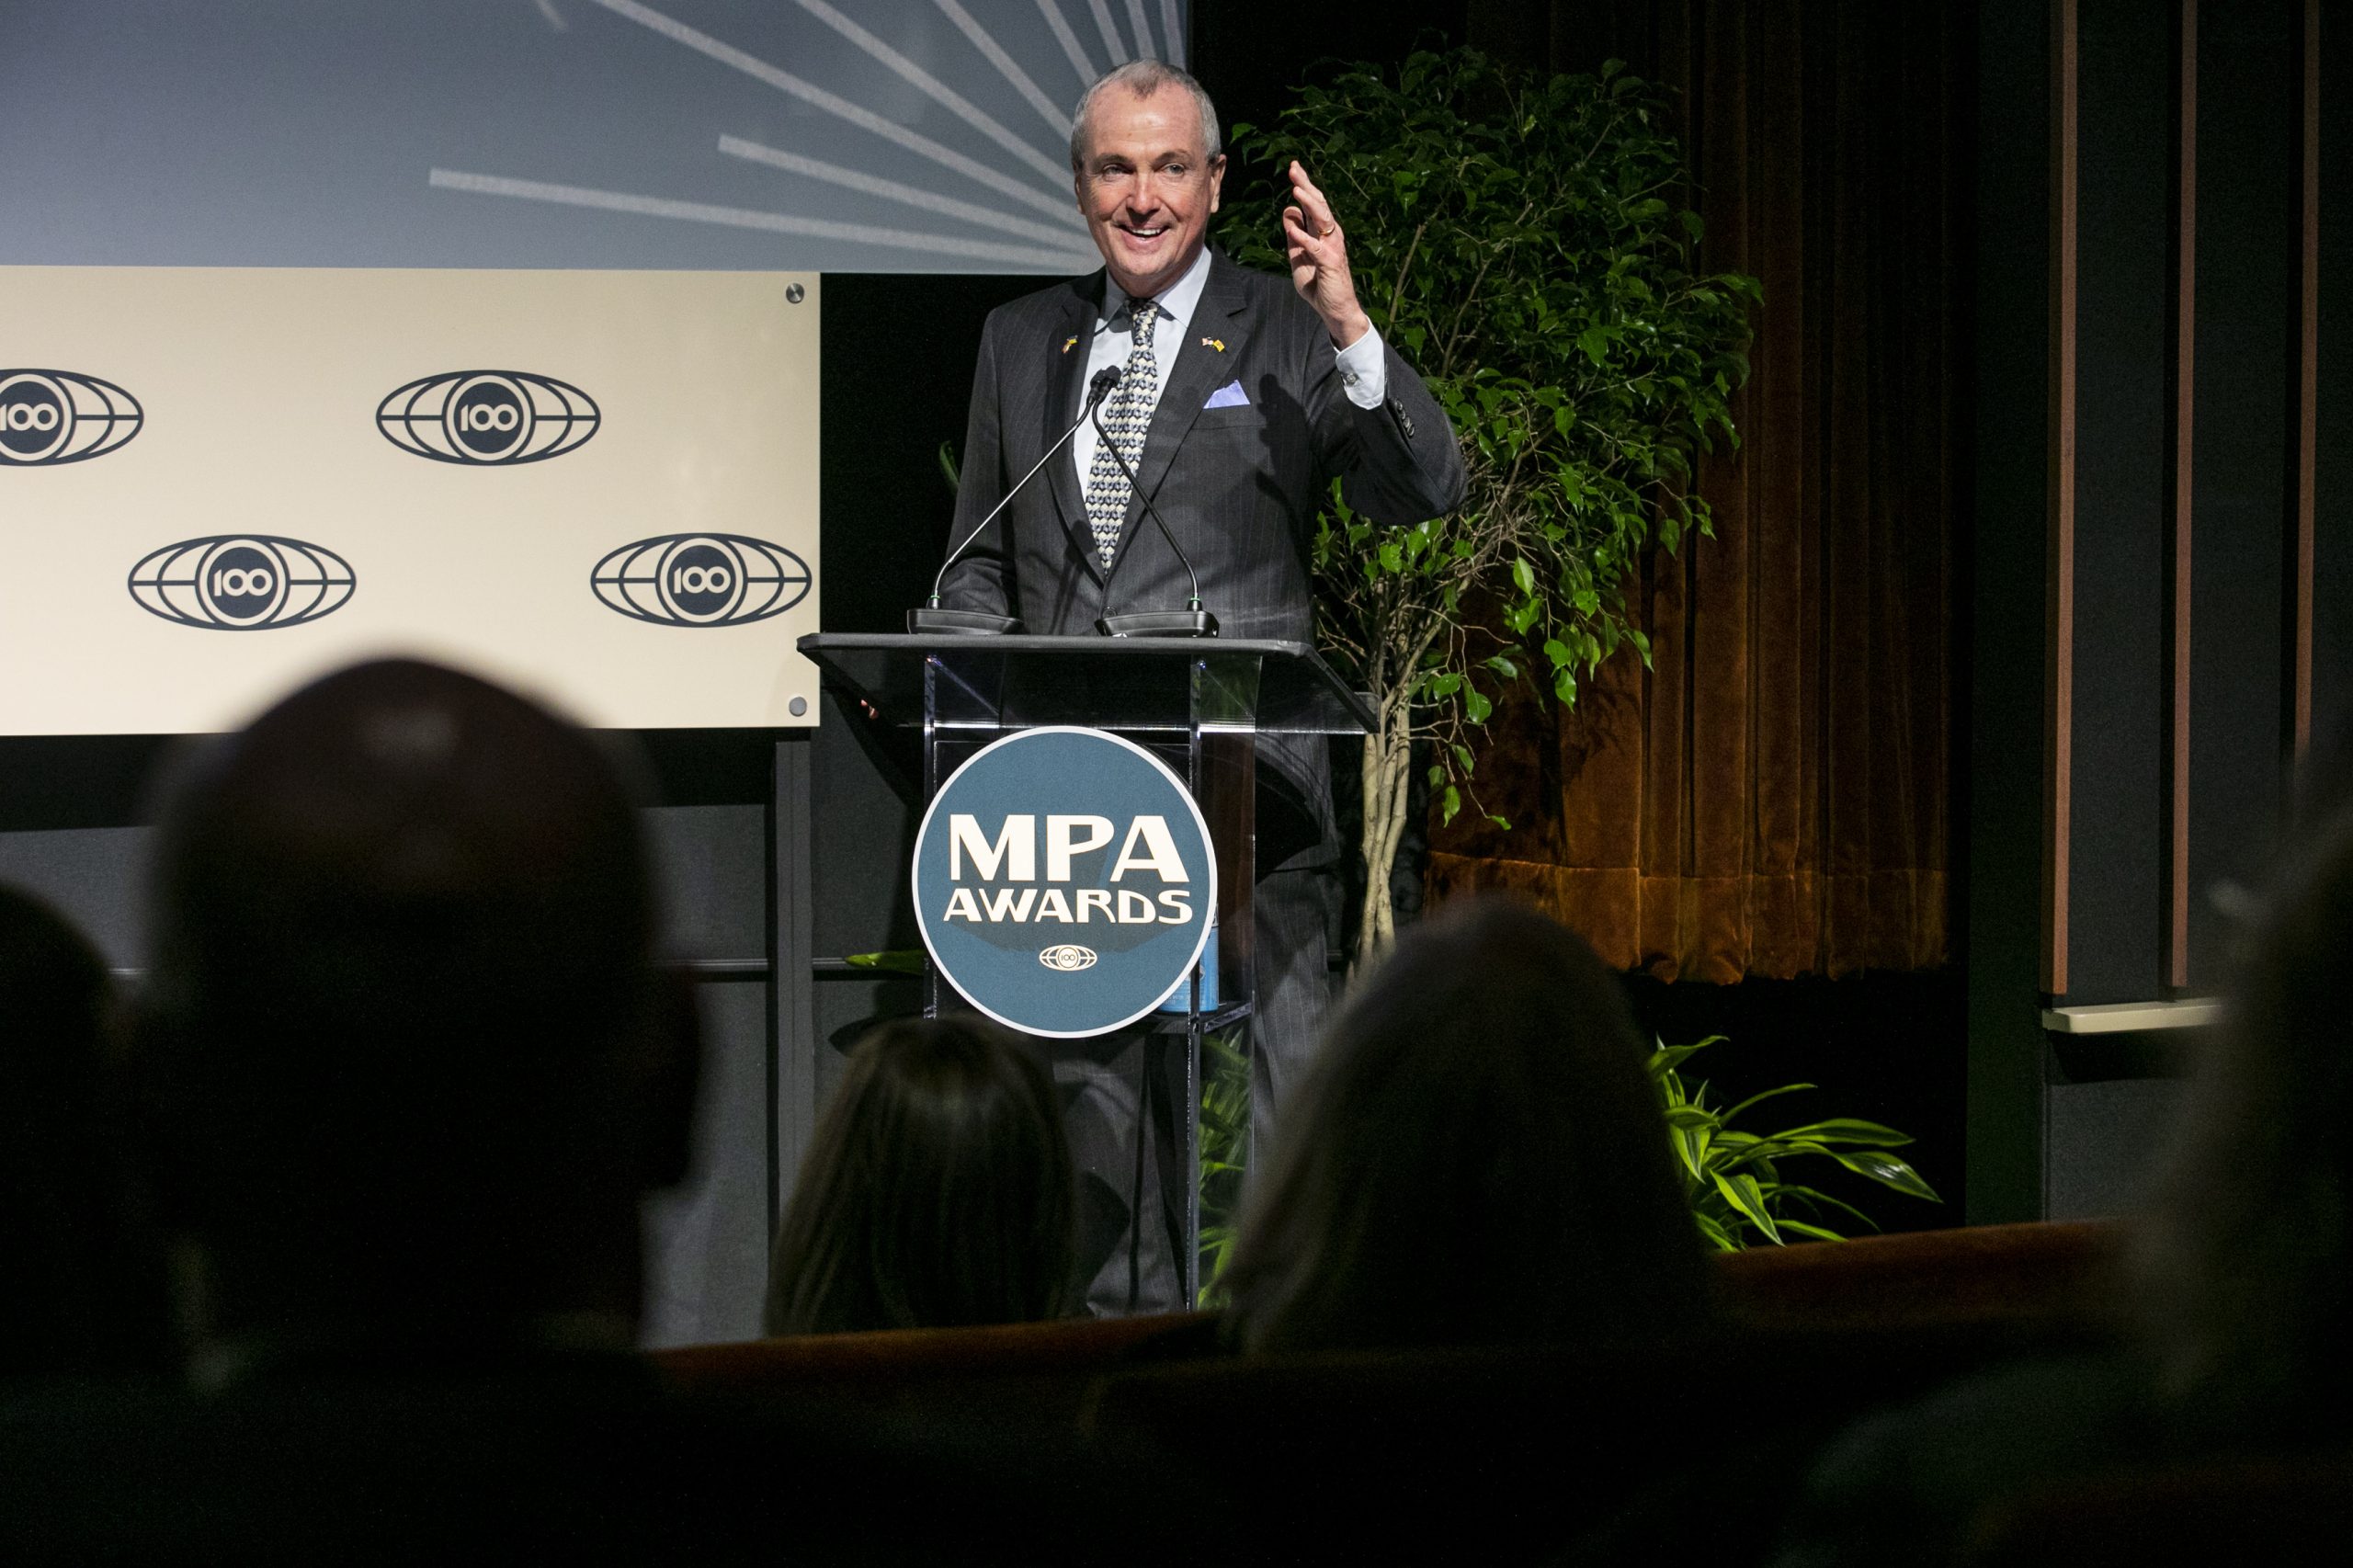 Governor Phil Murphy (D-NJ), recipient of the MPA Industry Champion Award. (Credit: Kristoffer Tripplaar)